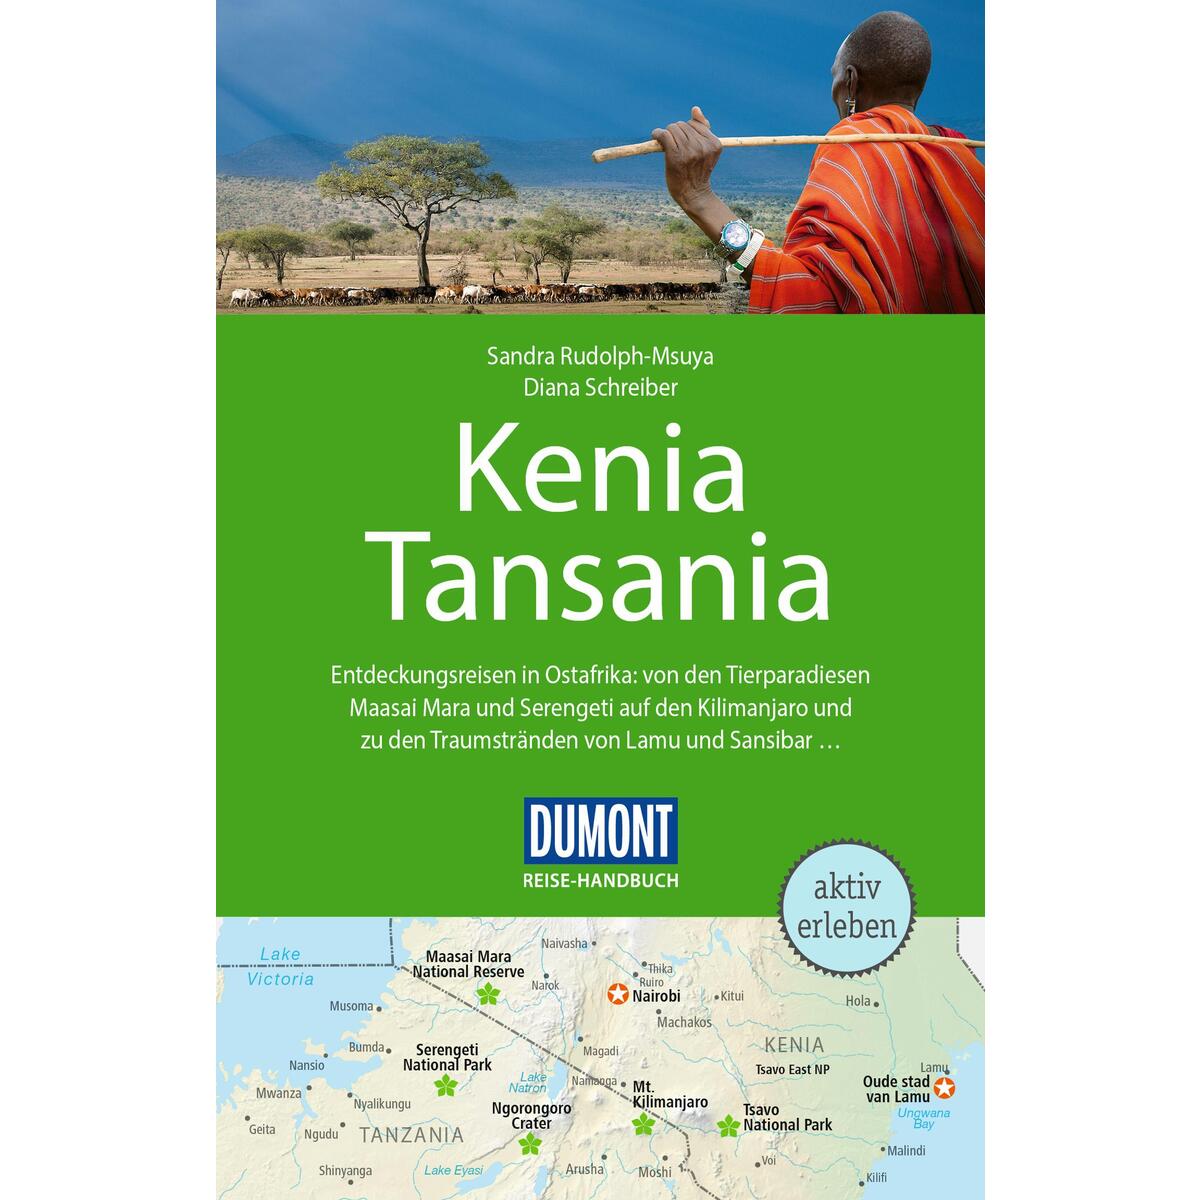 DuMont Reise-Handbuch Reiseführer Kenia, Tansania von Dumont Reise Vlg GmbH + C